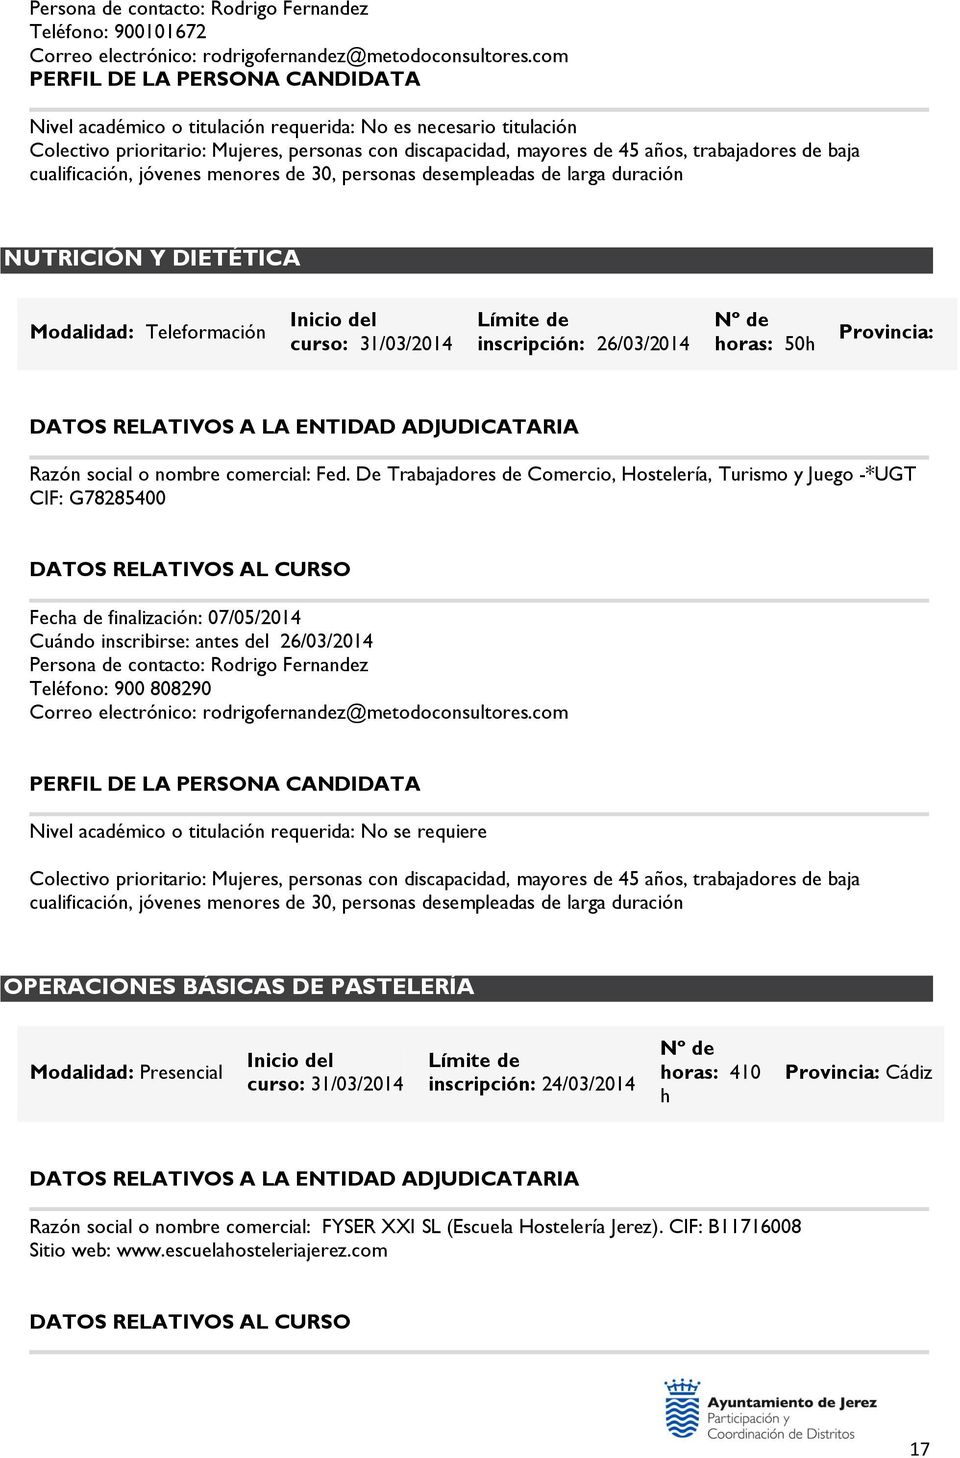 OPERACIONES BÁSICAS DE PASTELERÍA Modalidad: Presencial inscripción: 24/03/2014 horas: 410 h Cádiz Razón social o